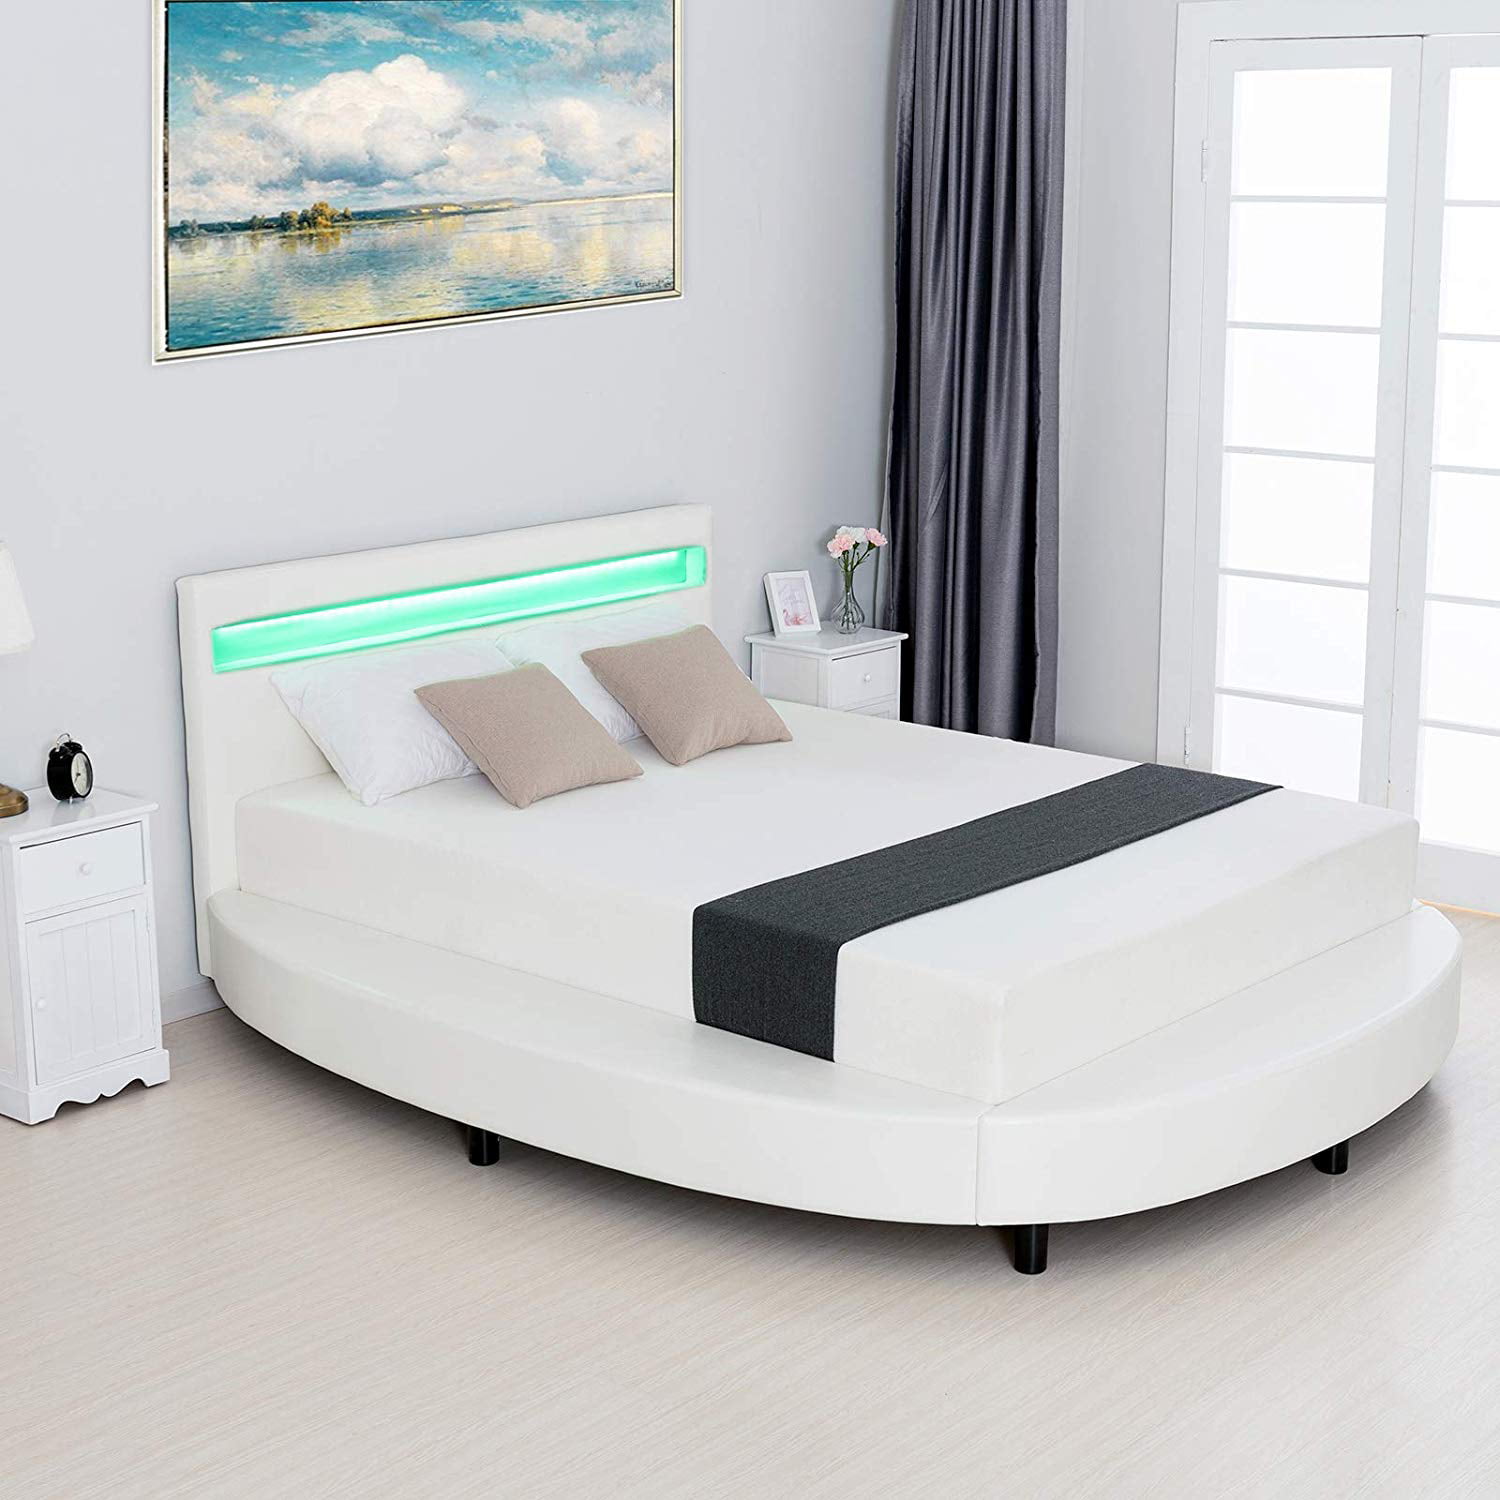 Mecor Modern Upholstered Round Platform, Modern White Leather Headboard Round Bed King Size